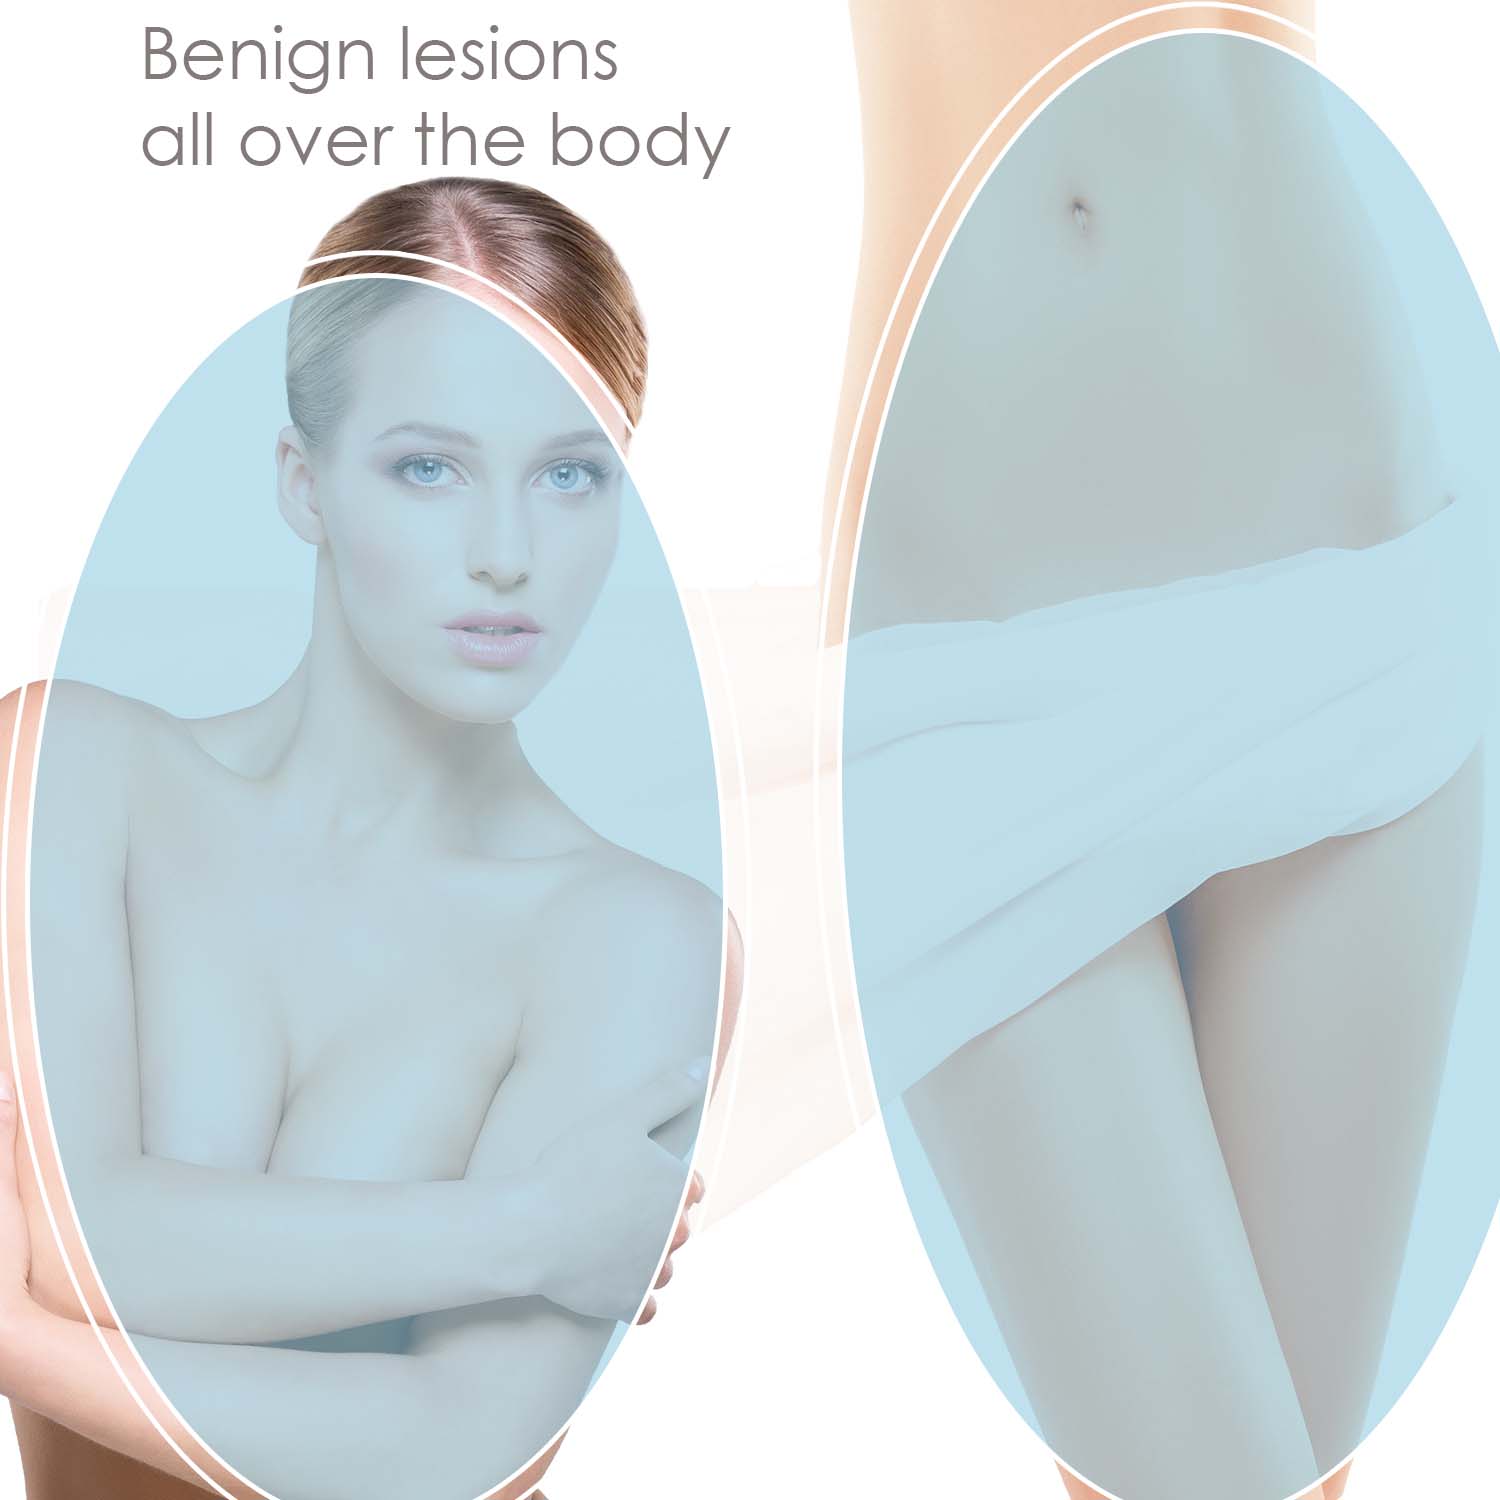 bening-lesion-thermocoagulation